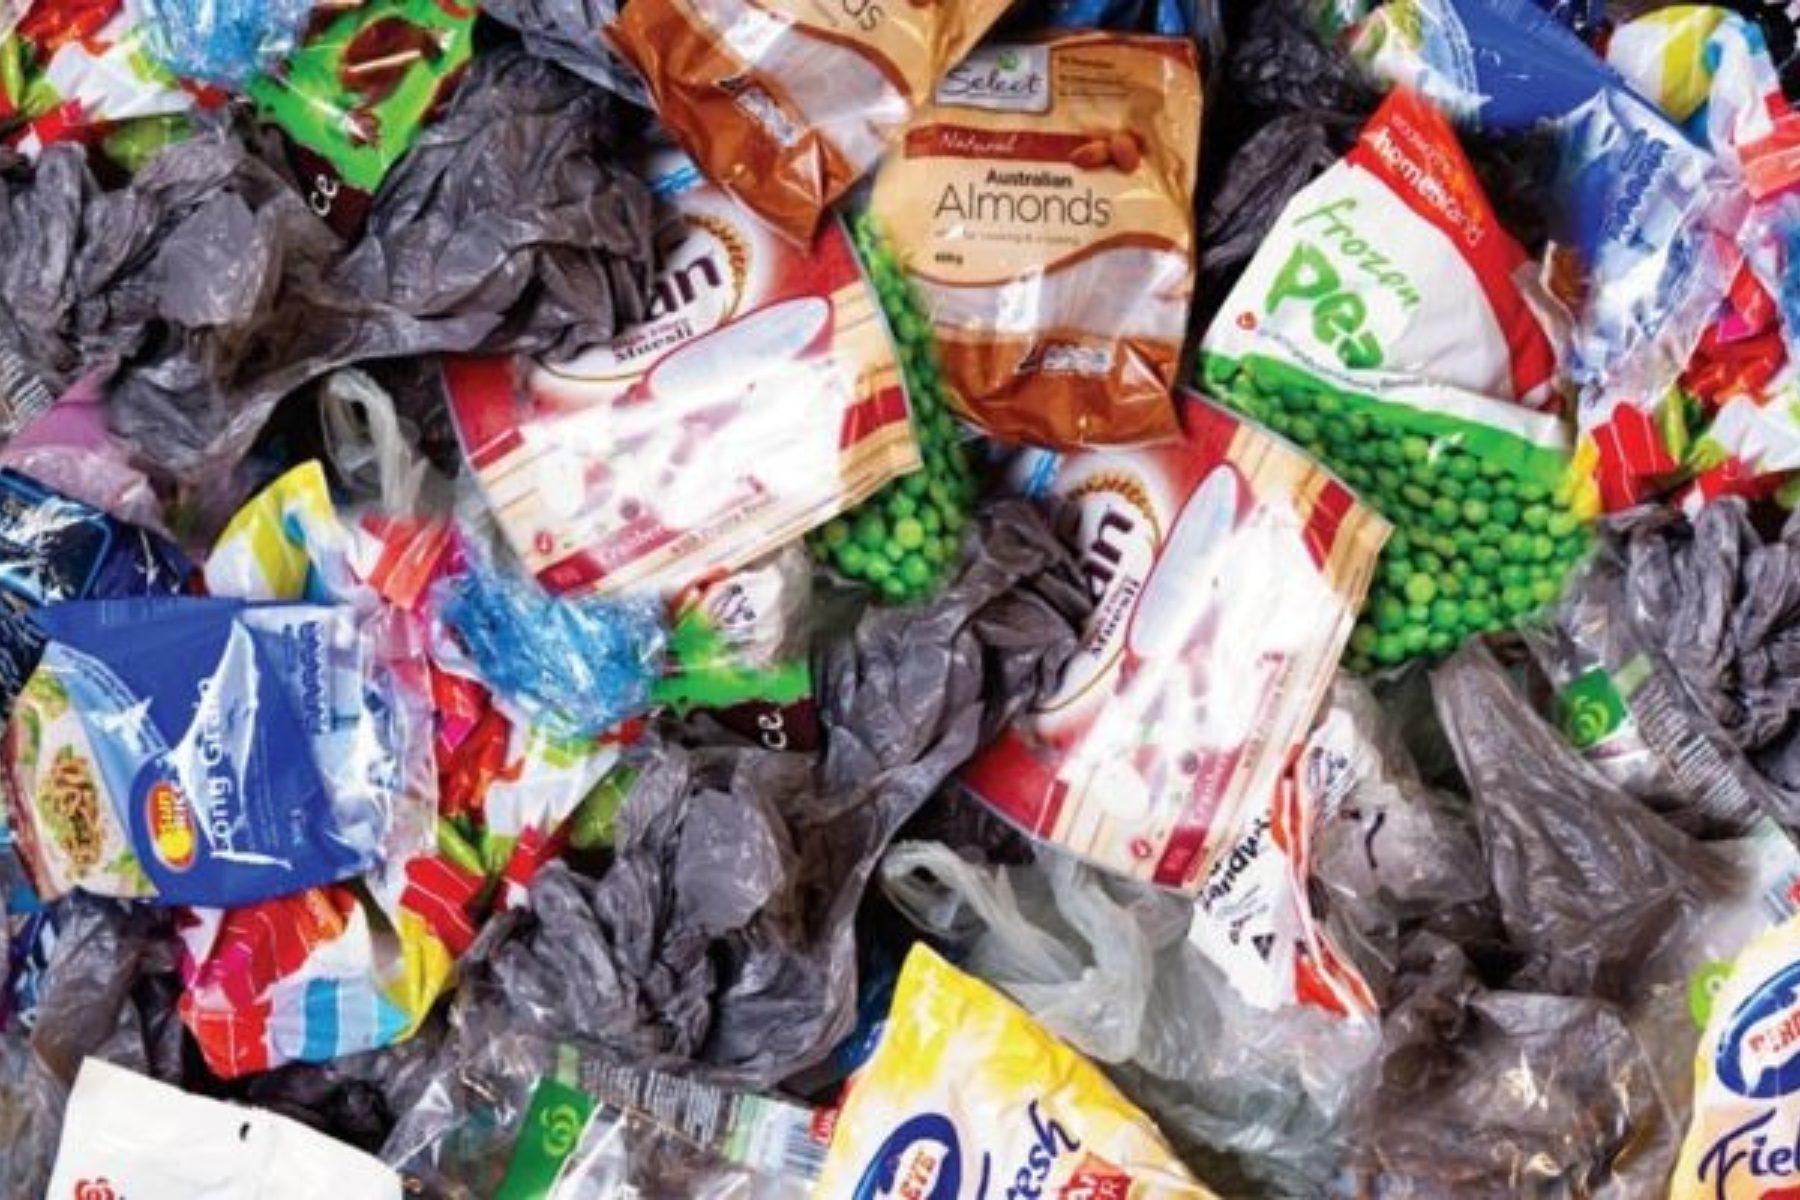 APCO Update, new Soft Plastics labelling option - National Retail  Association